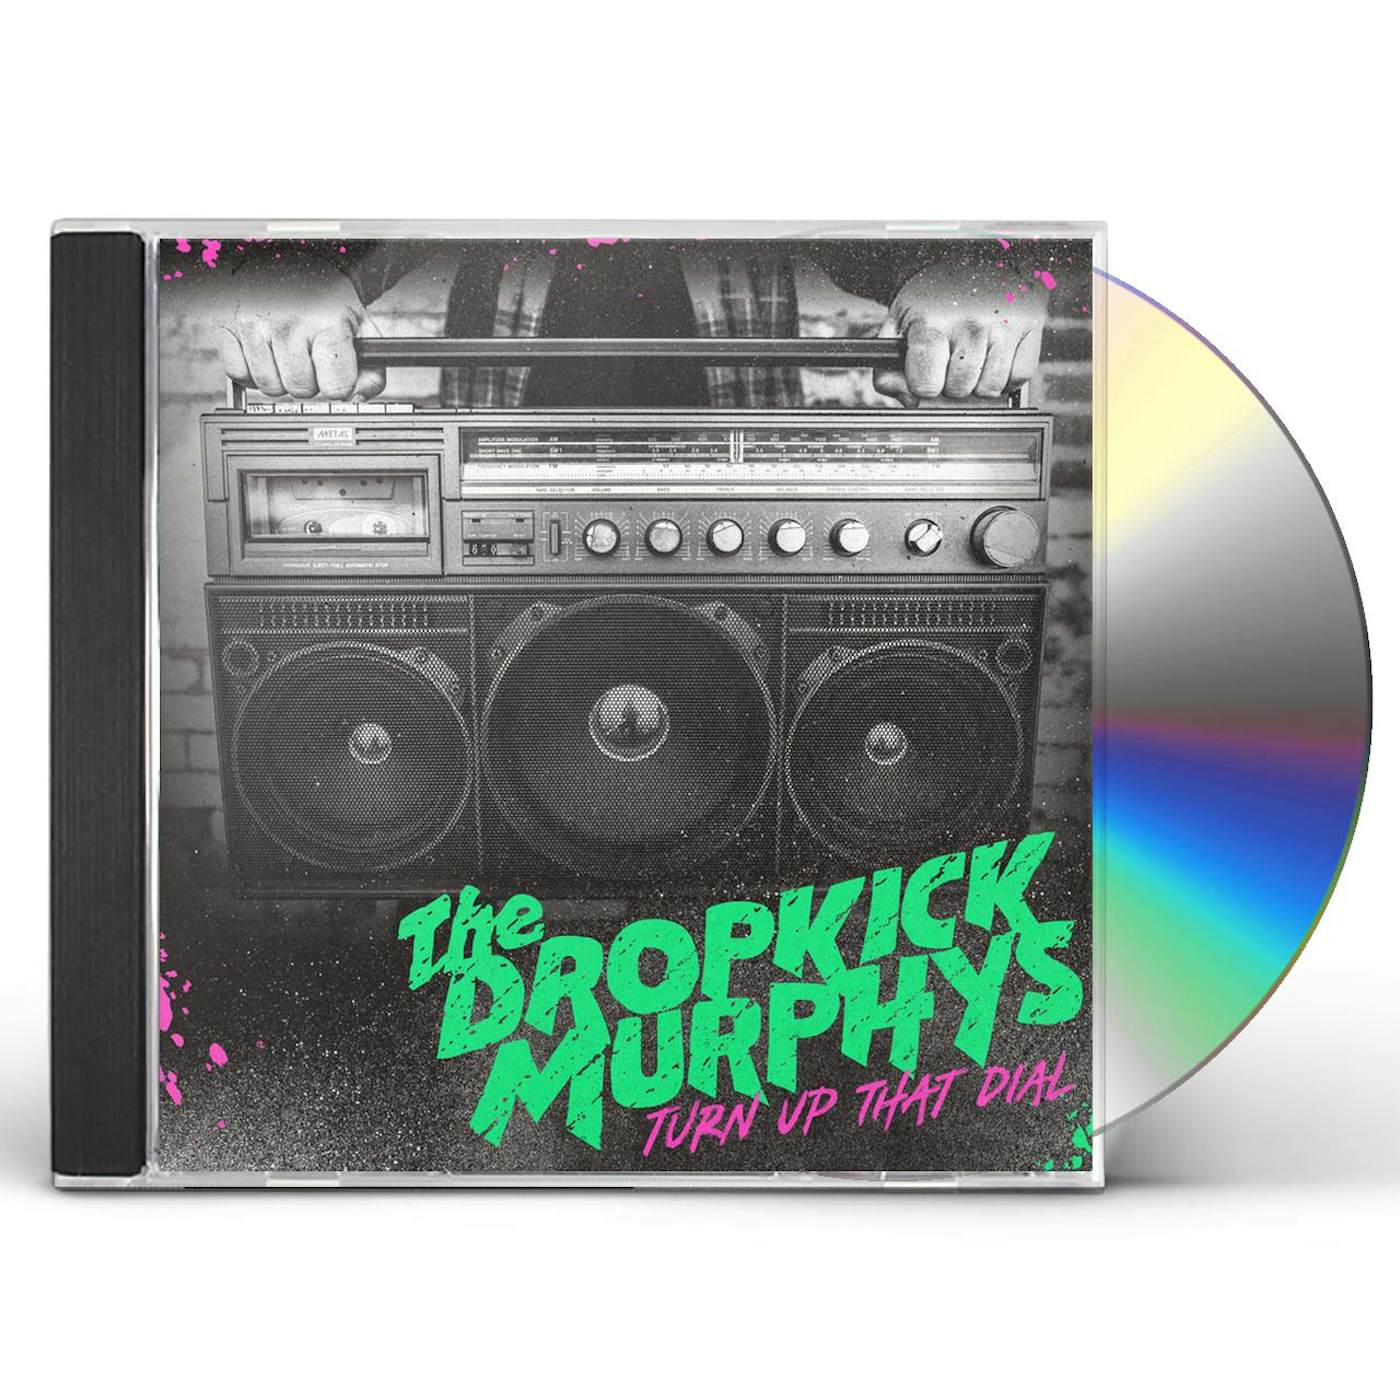 Dropkick Murphys TURN UP THAT DIAL CD